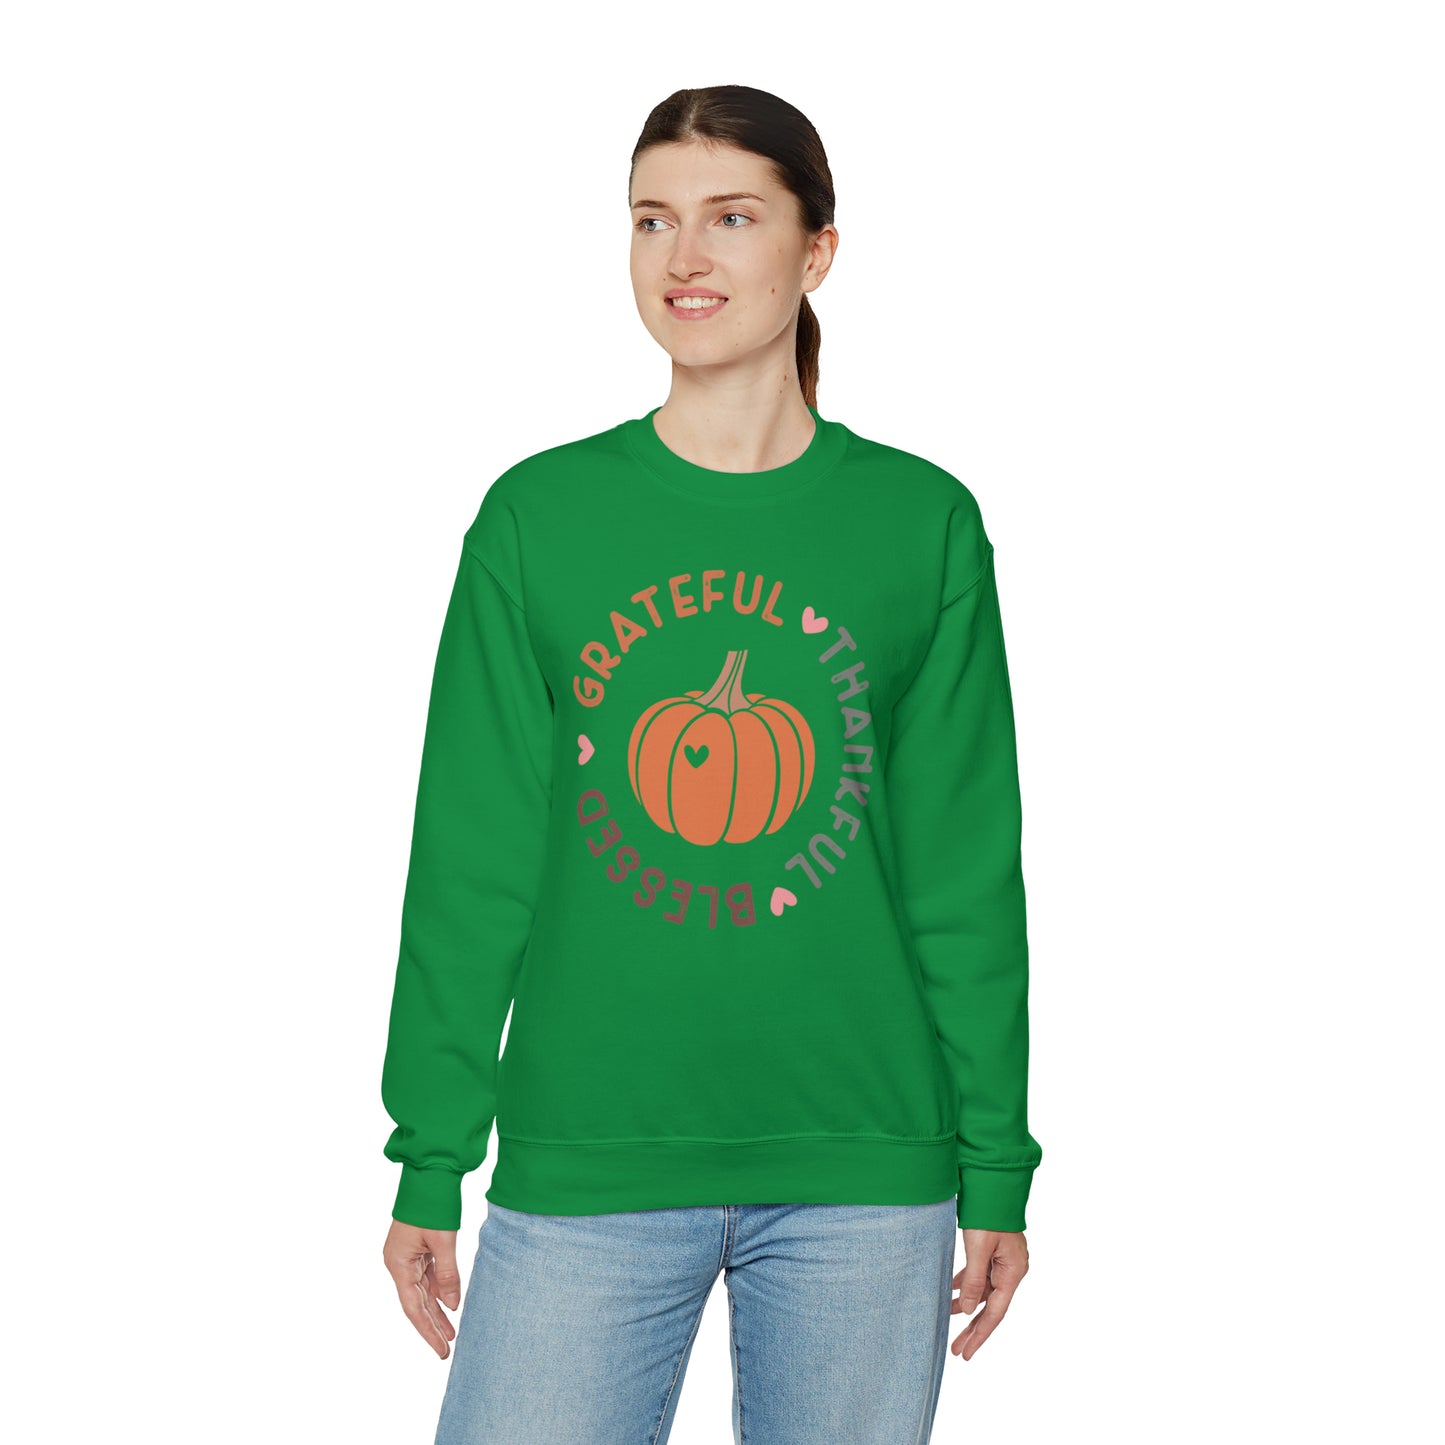 Grateful Thankful Blessed | Crewneck Sweatshirt | Thanksgiving Sweatshirt